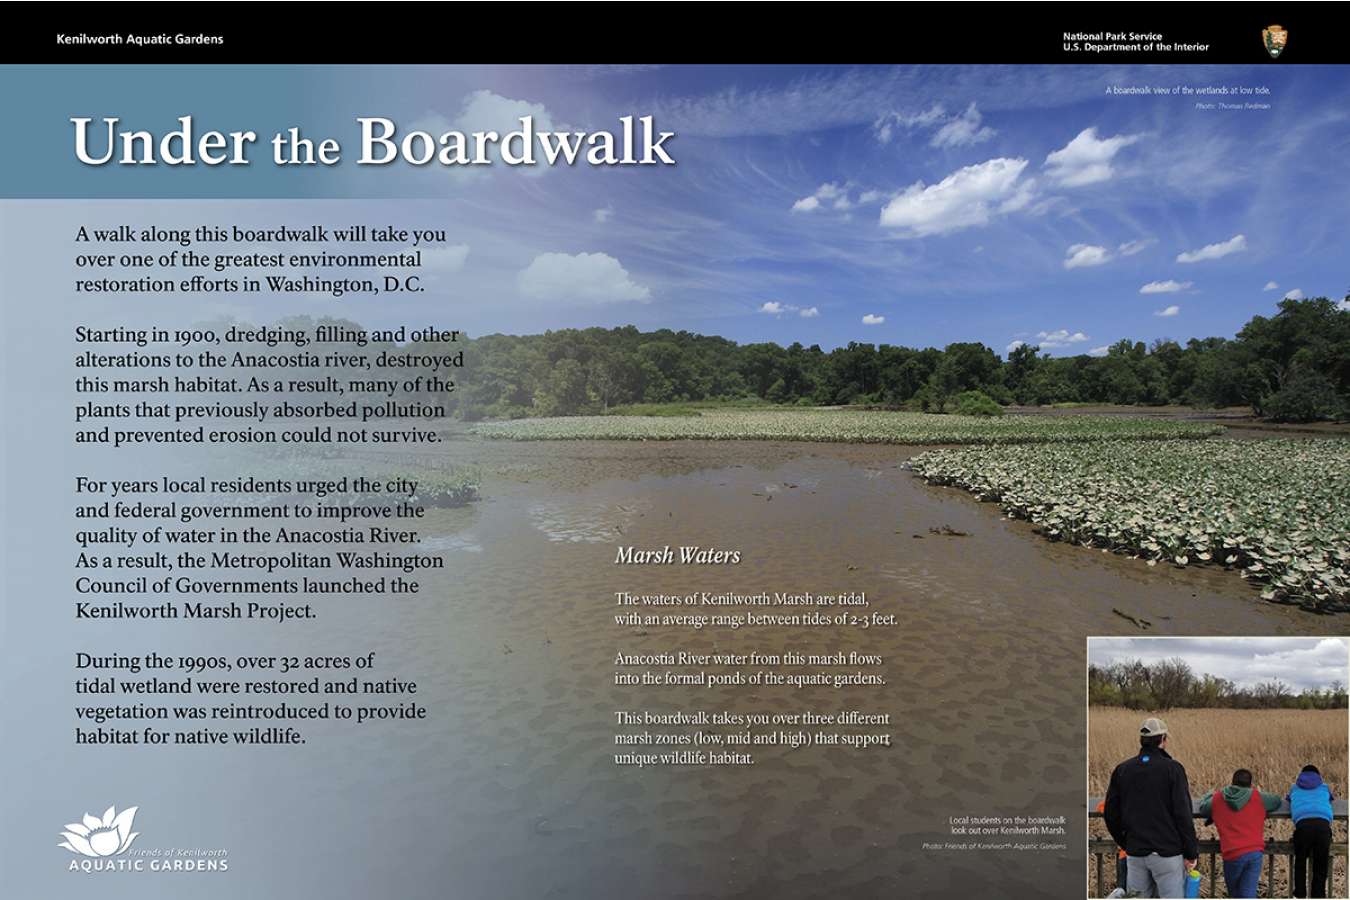 fokag 5 : Over 32 acres of tidal wetlands have been restored to provide natural habitat for wildlife.